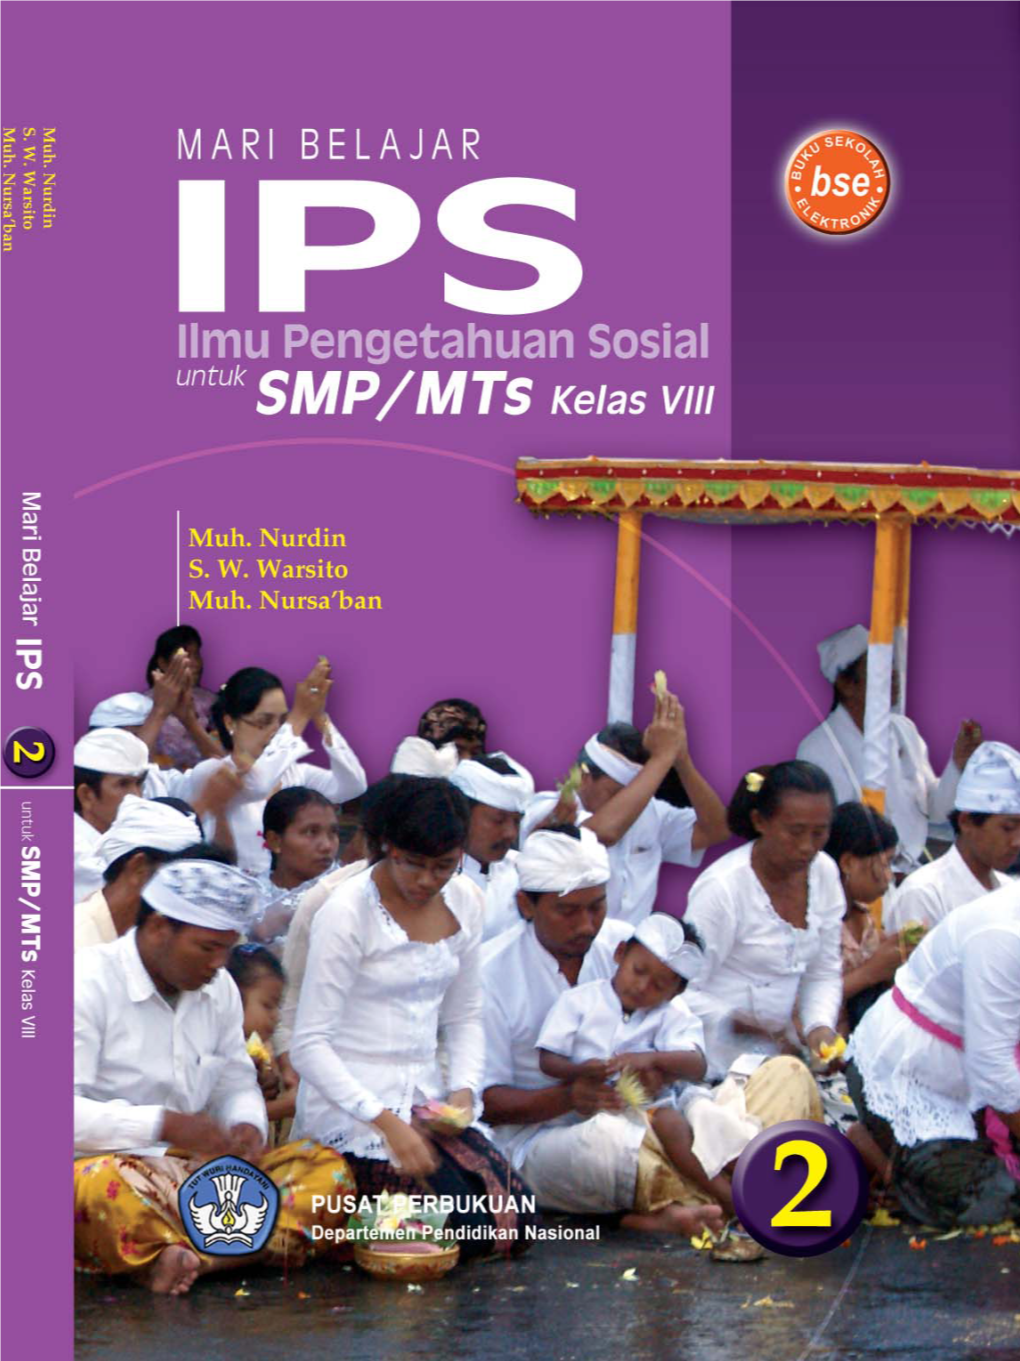 Mari Belajar IPS 2 Untuk SMP/Mts Kelas VIII